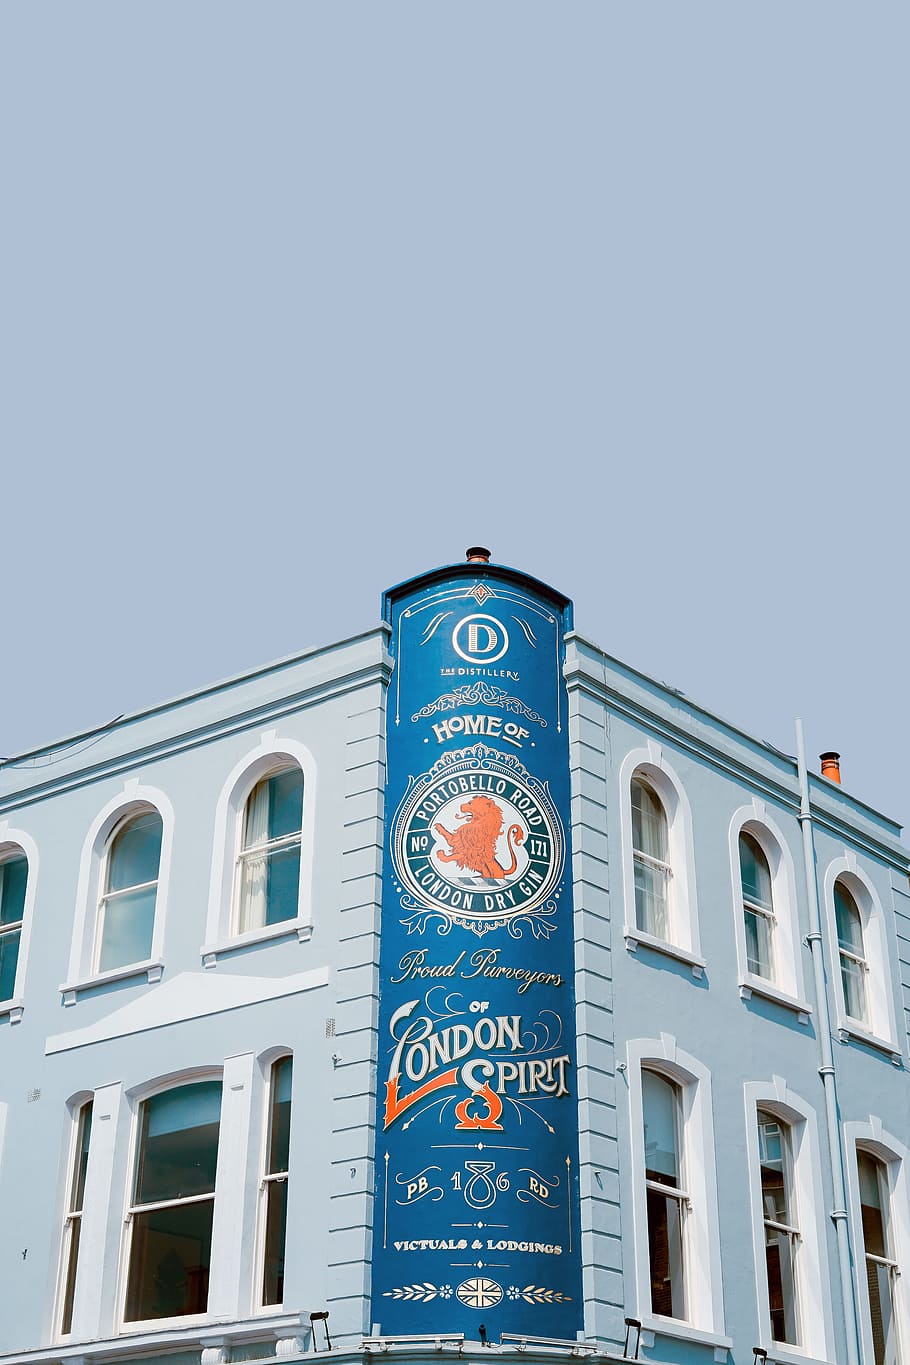 blue Home of Proud of London Spirit banner, building, mural, art